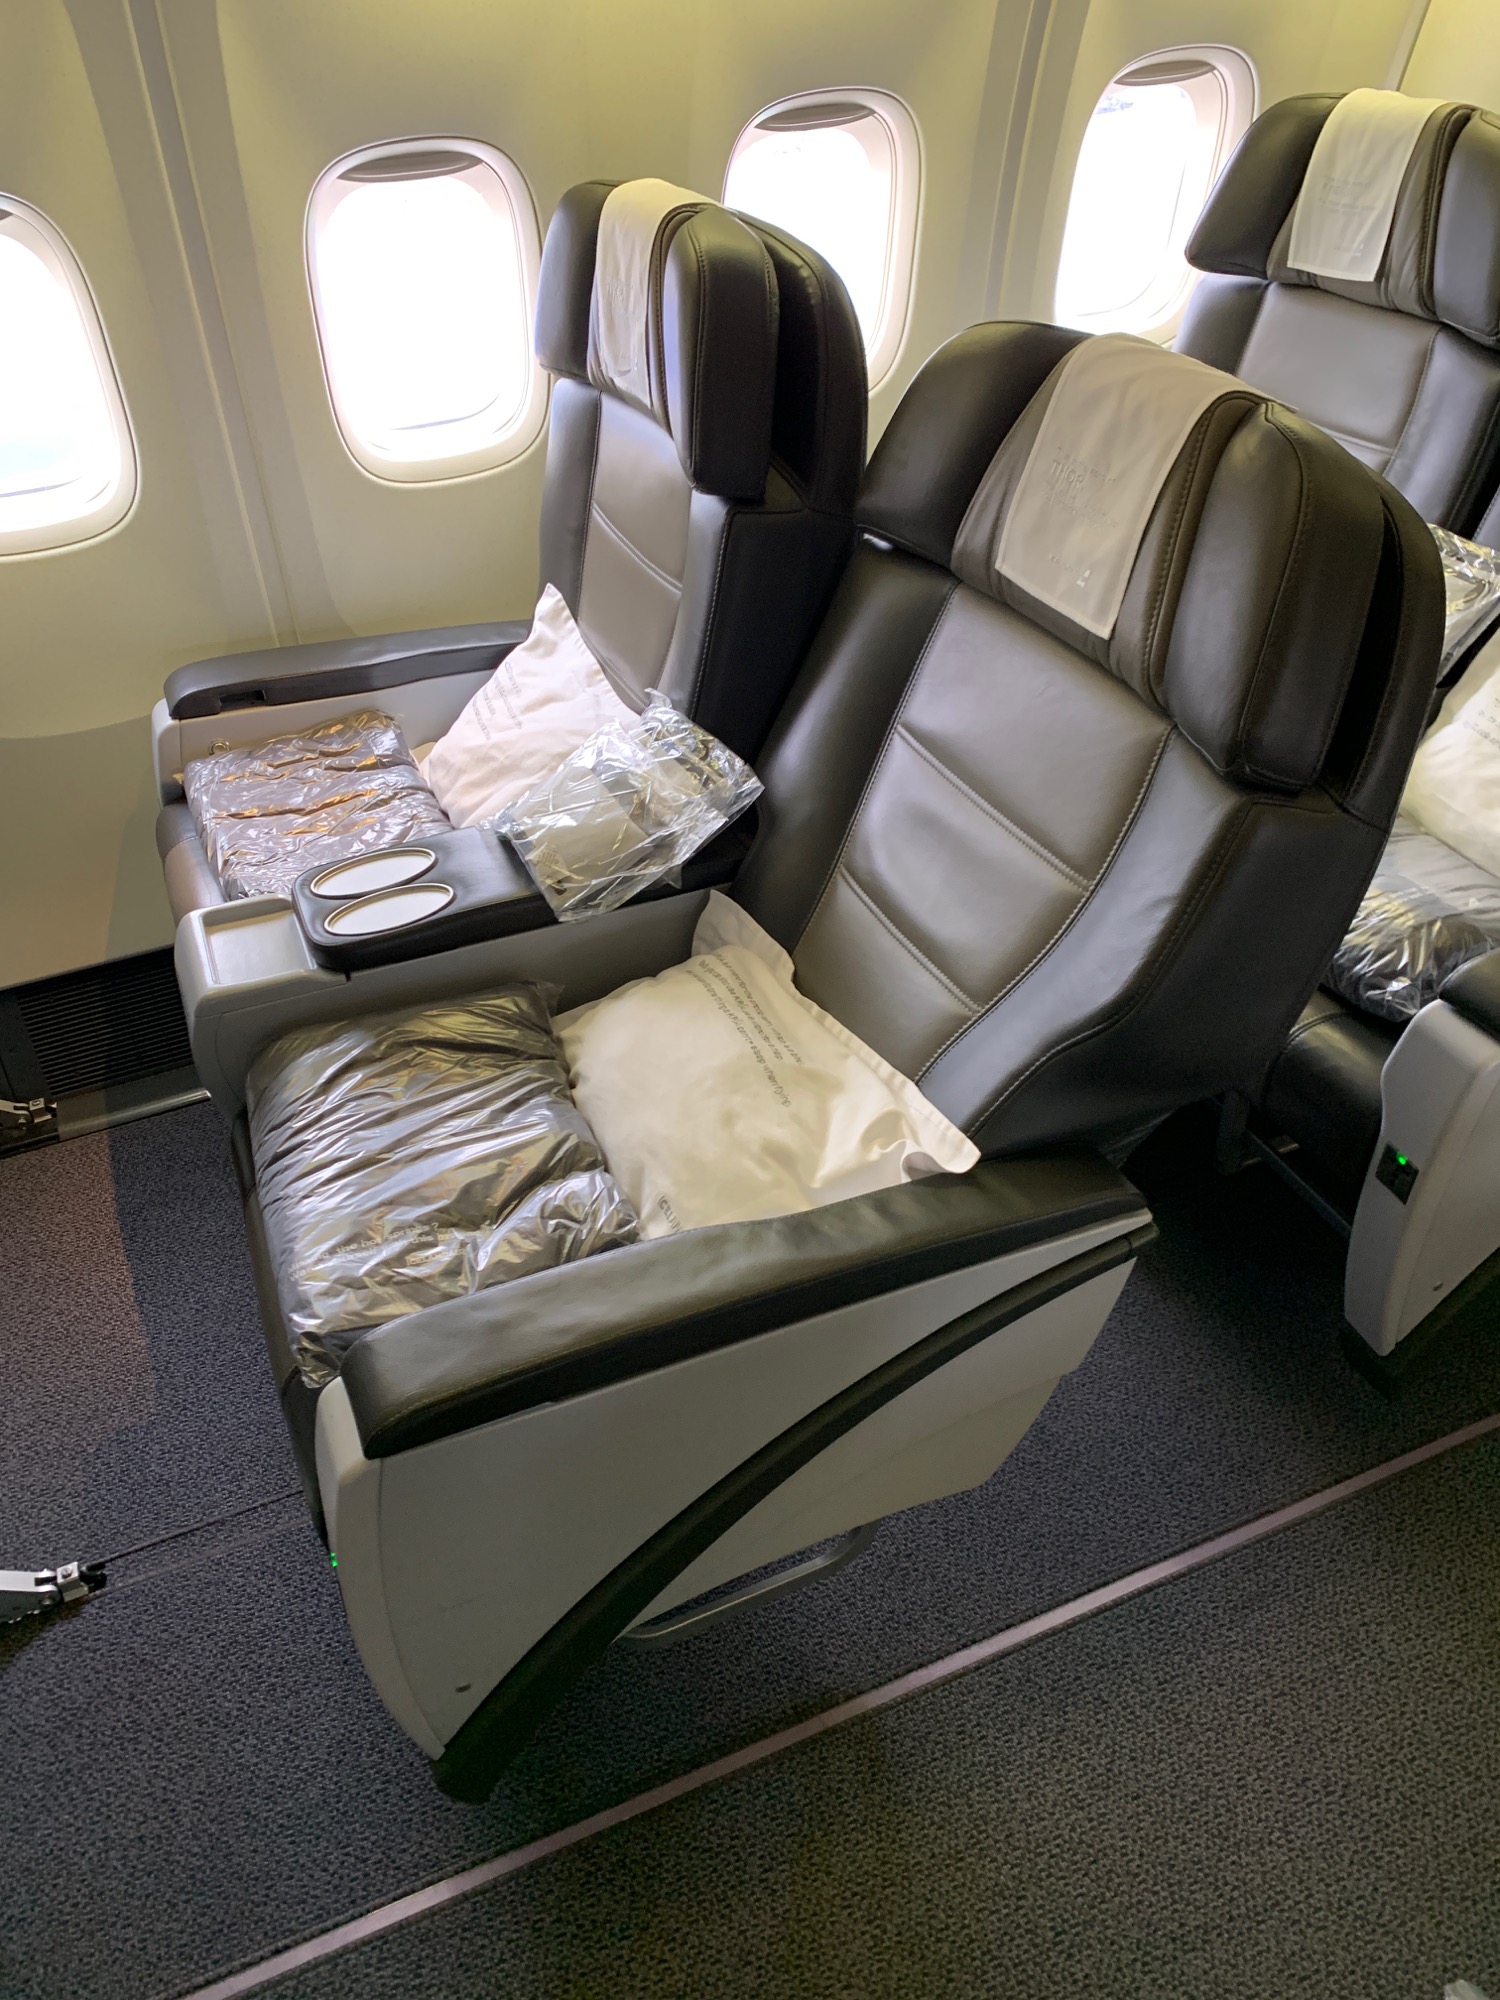 2. Review of Icelandair's Saga Premium Business Class